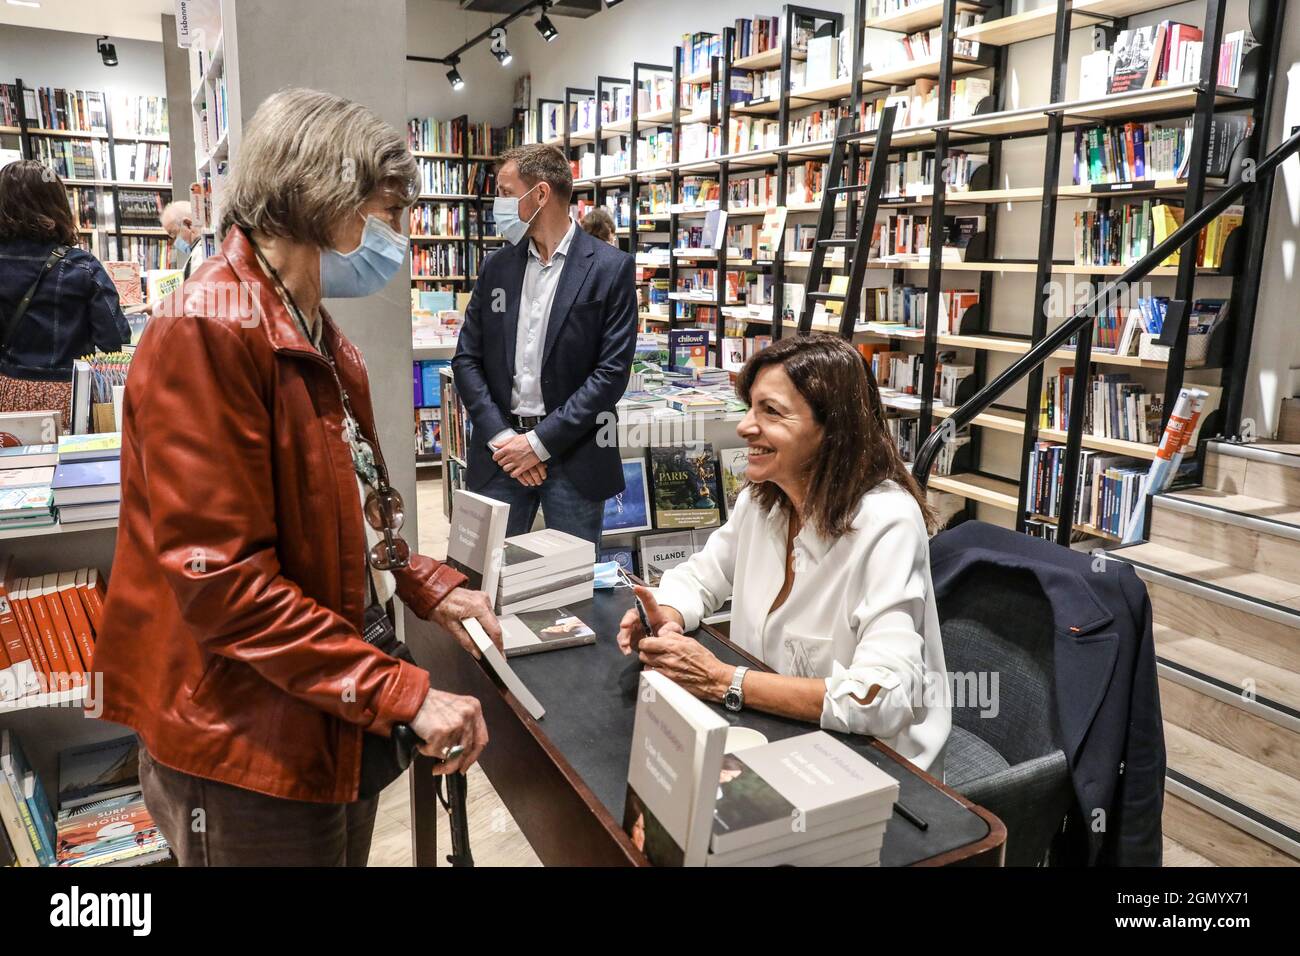 DEDICATION, ANNE HIDALGO WITH HER BOOK IN LE DIVAN BOOKSTORE IN PARIS Stock Photo